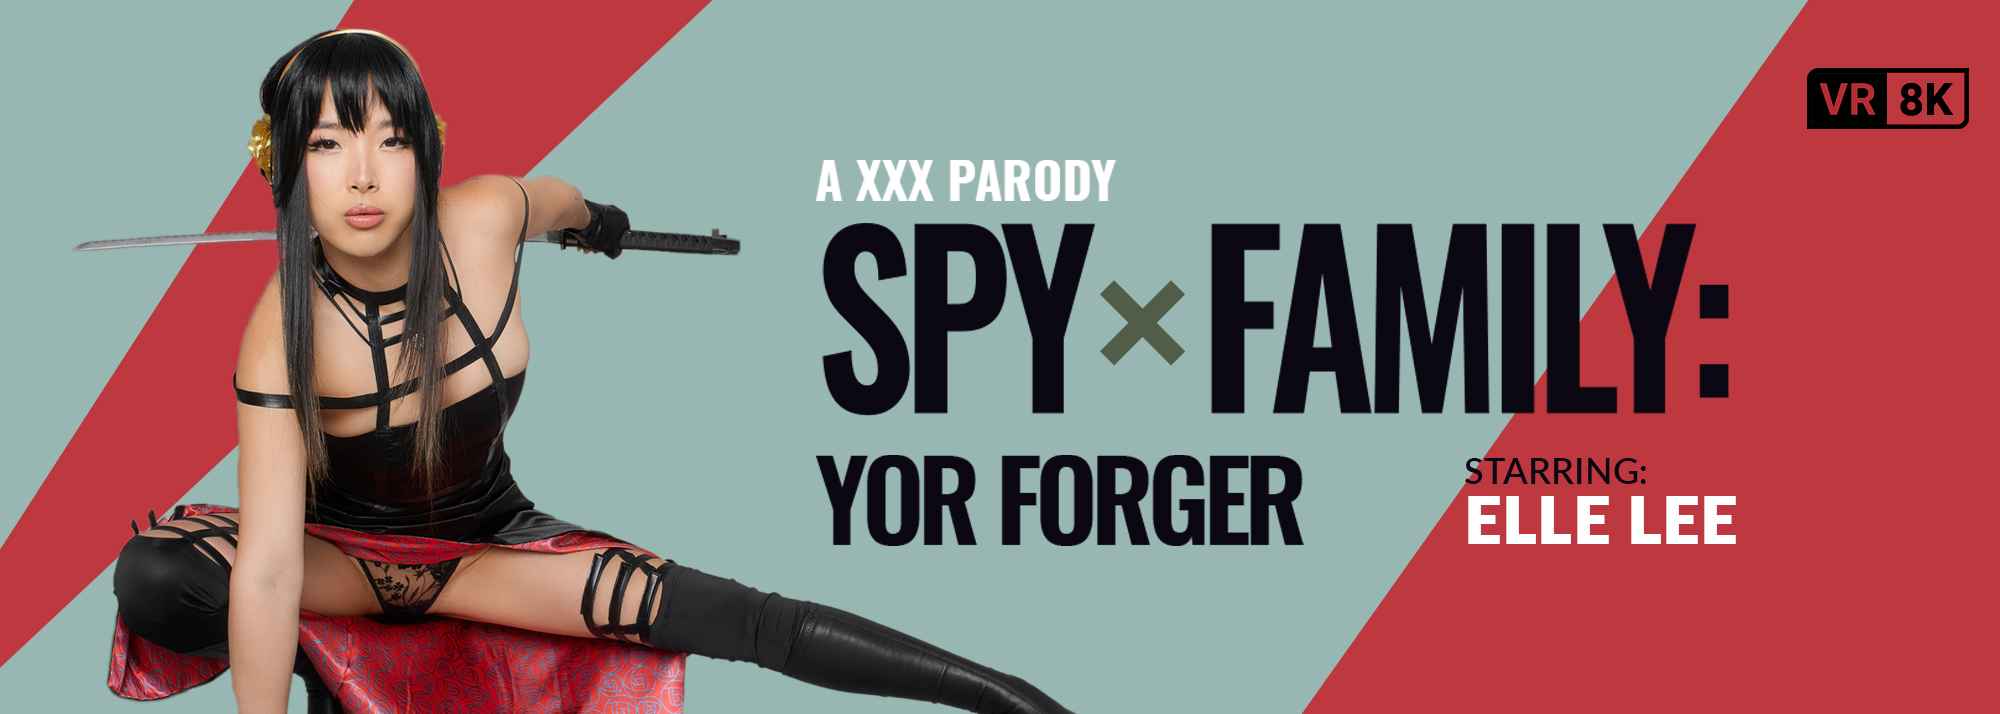 Spy X Family: Yor Forger (A Porn Parody) - VR Video, Starring: Elle Lee